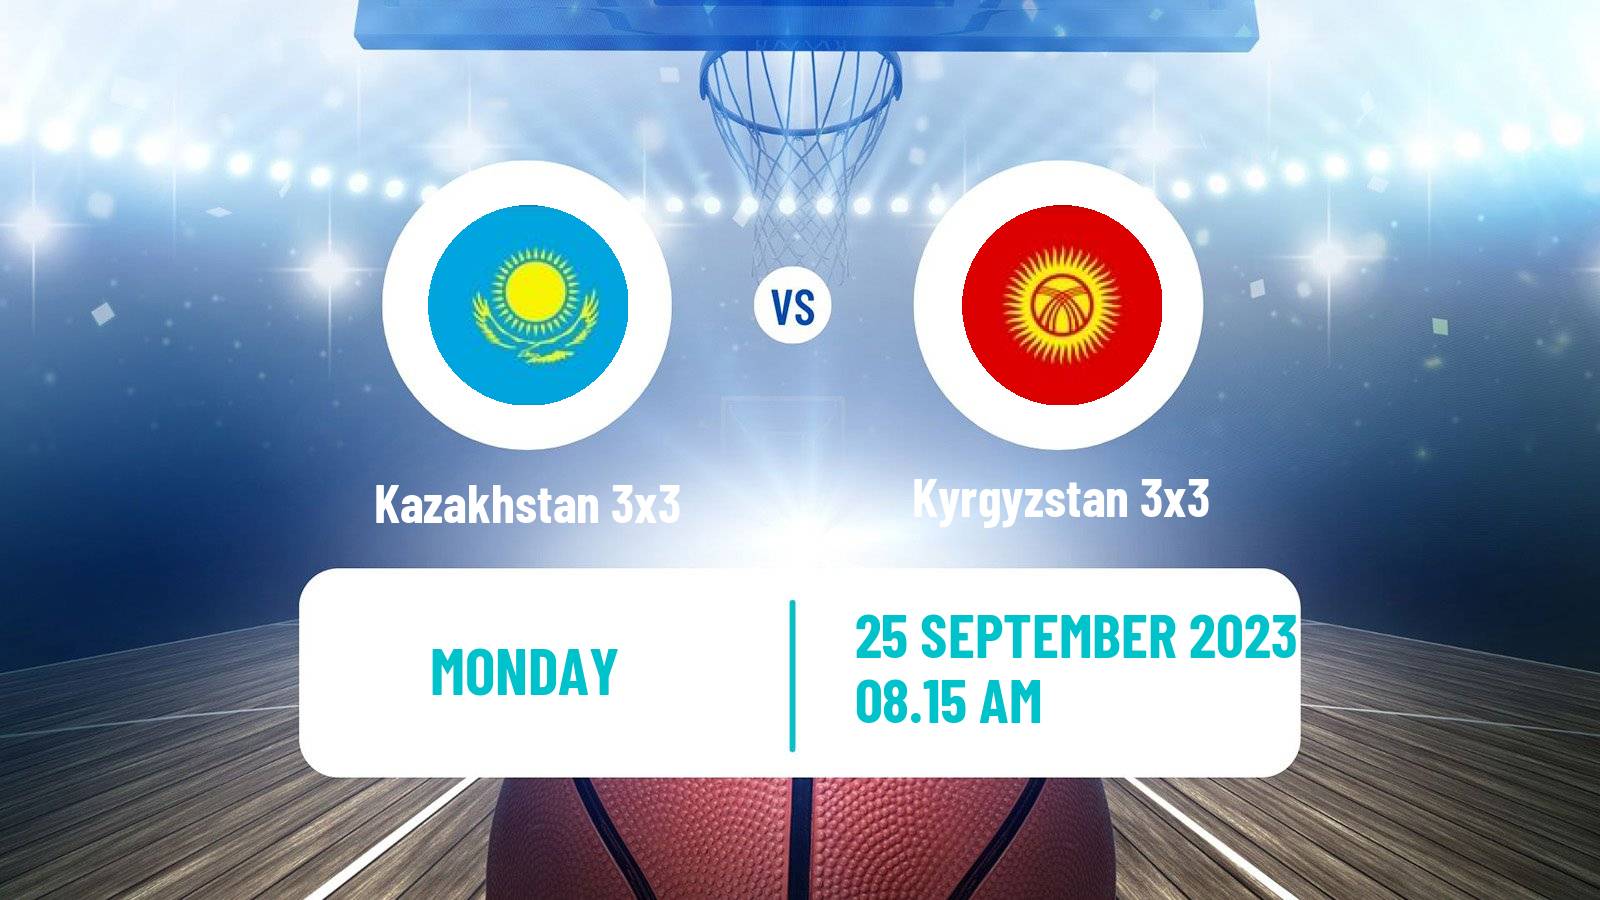 Basketball Asian Games Basketball 3x3 Kazakhstan 3x3 - Kyrgyzstan 3x3